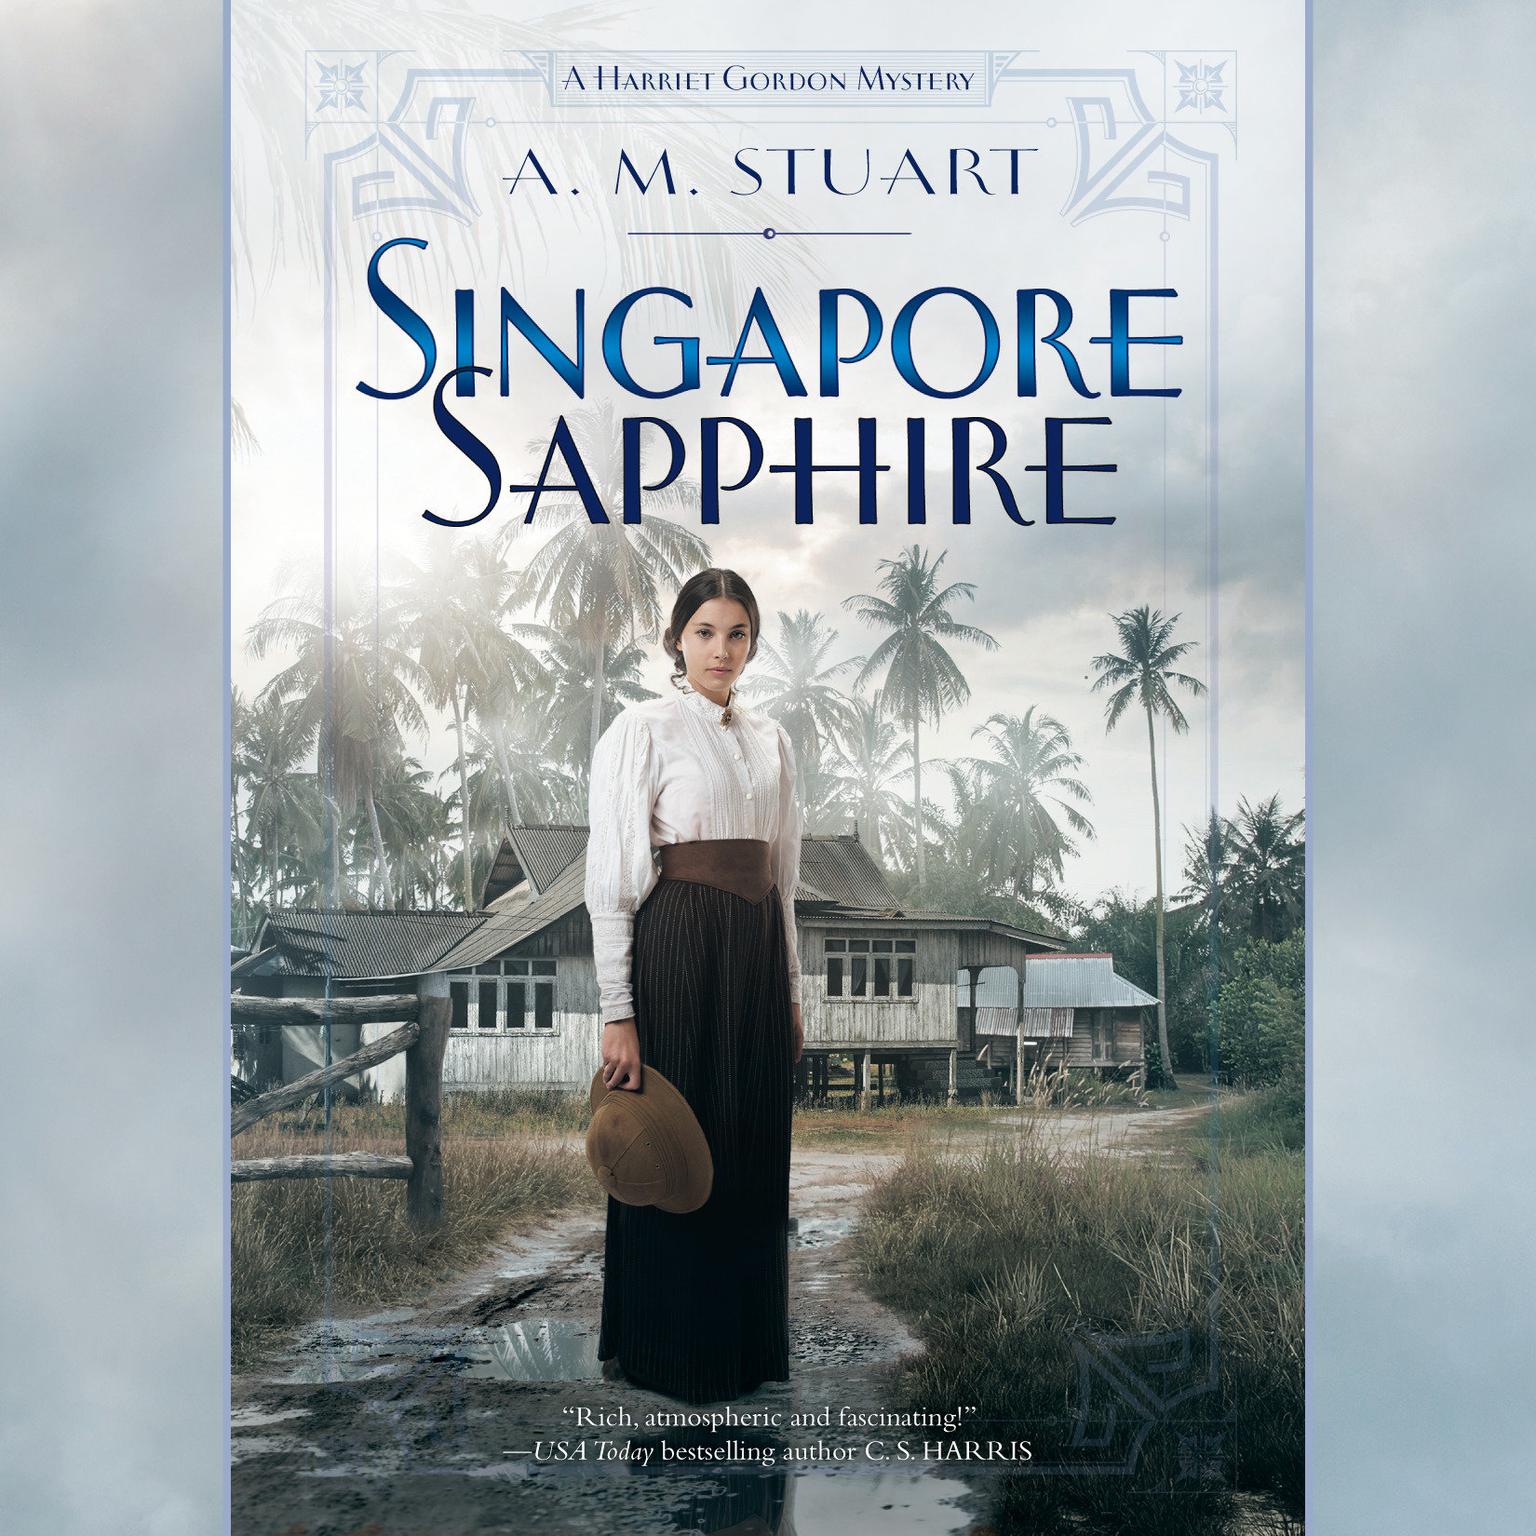 Singapore Sapphire Audiobook, by A. M. Stuart